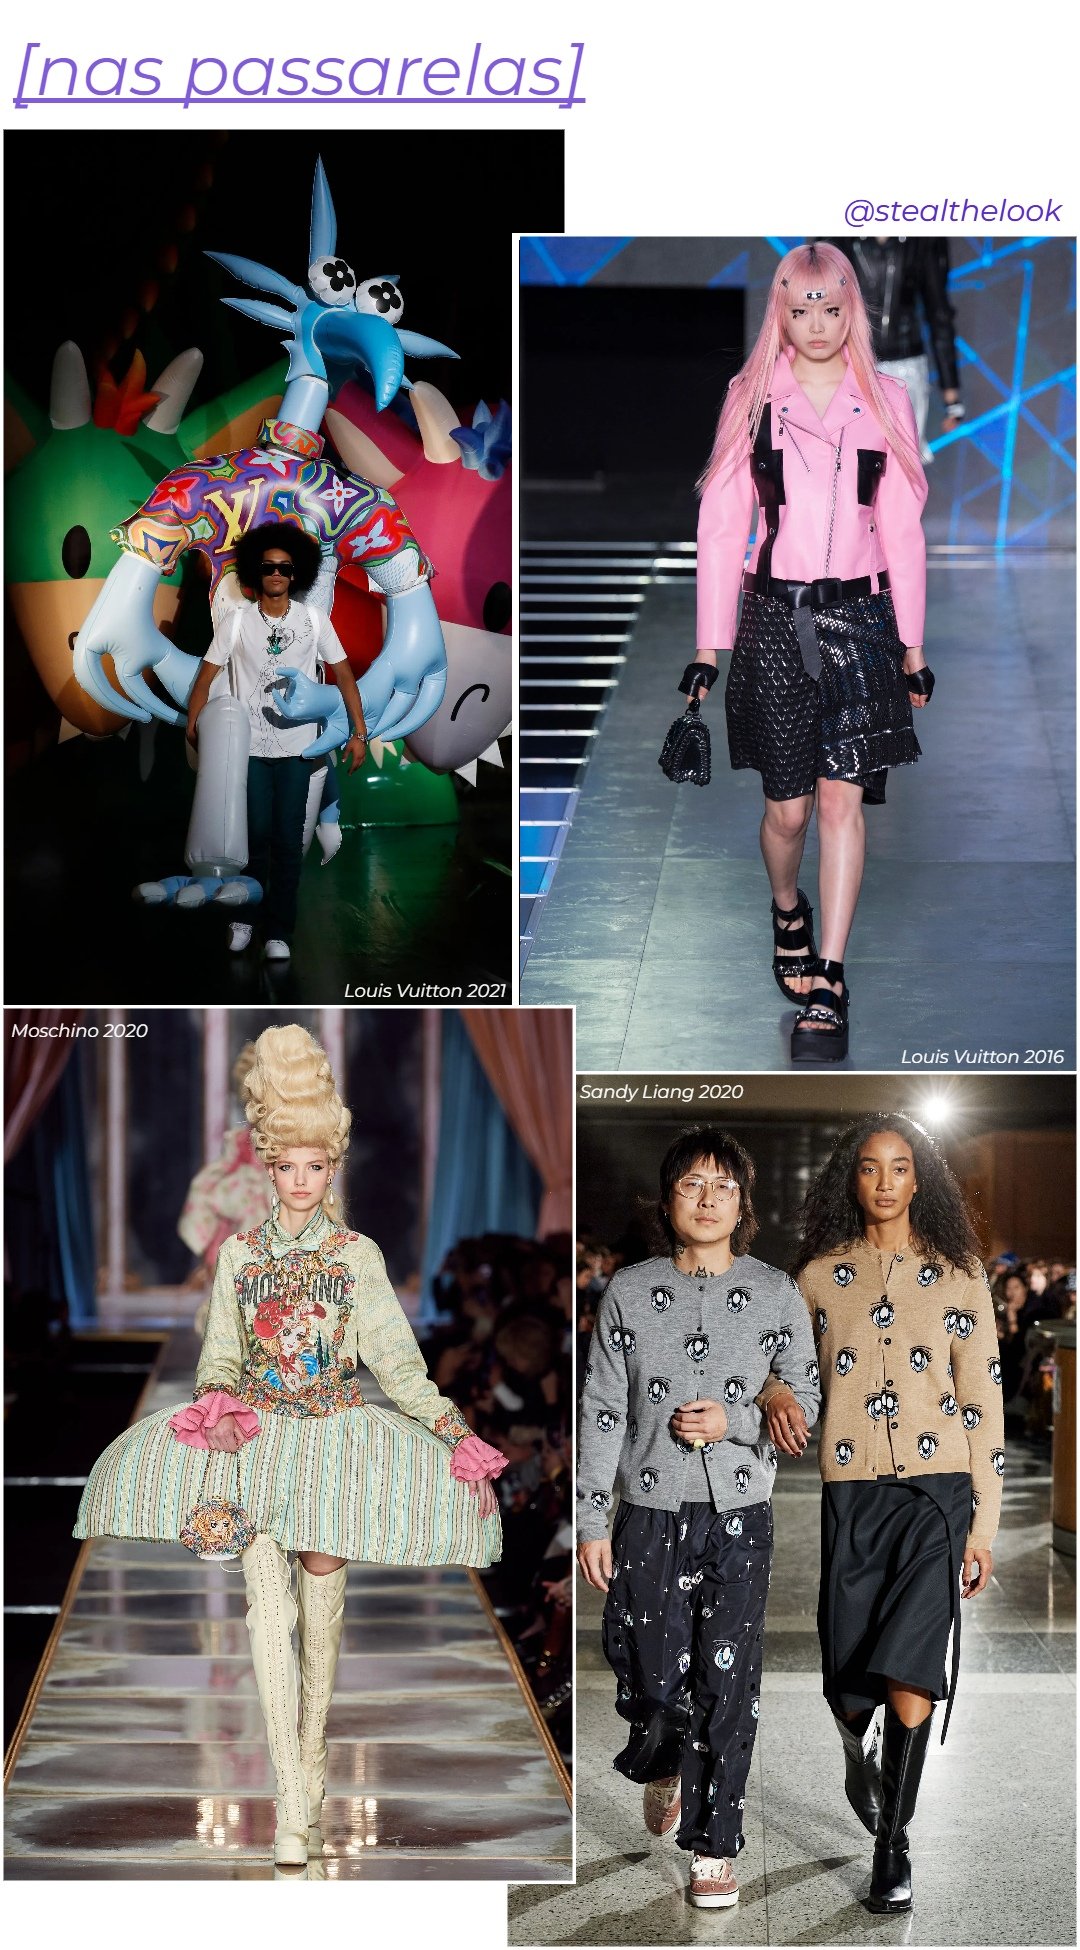 Louis Vuitton, Moschino e Jeremy Scott - roupas diversas - Anime - N/A - colagem de imagens - https://stealthelook.com.br